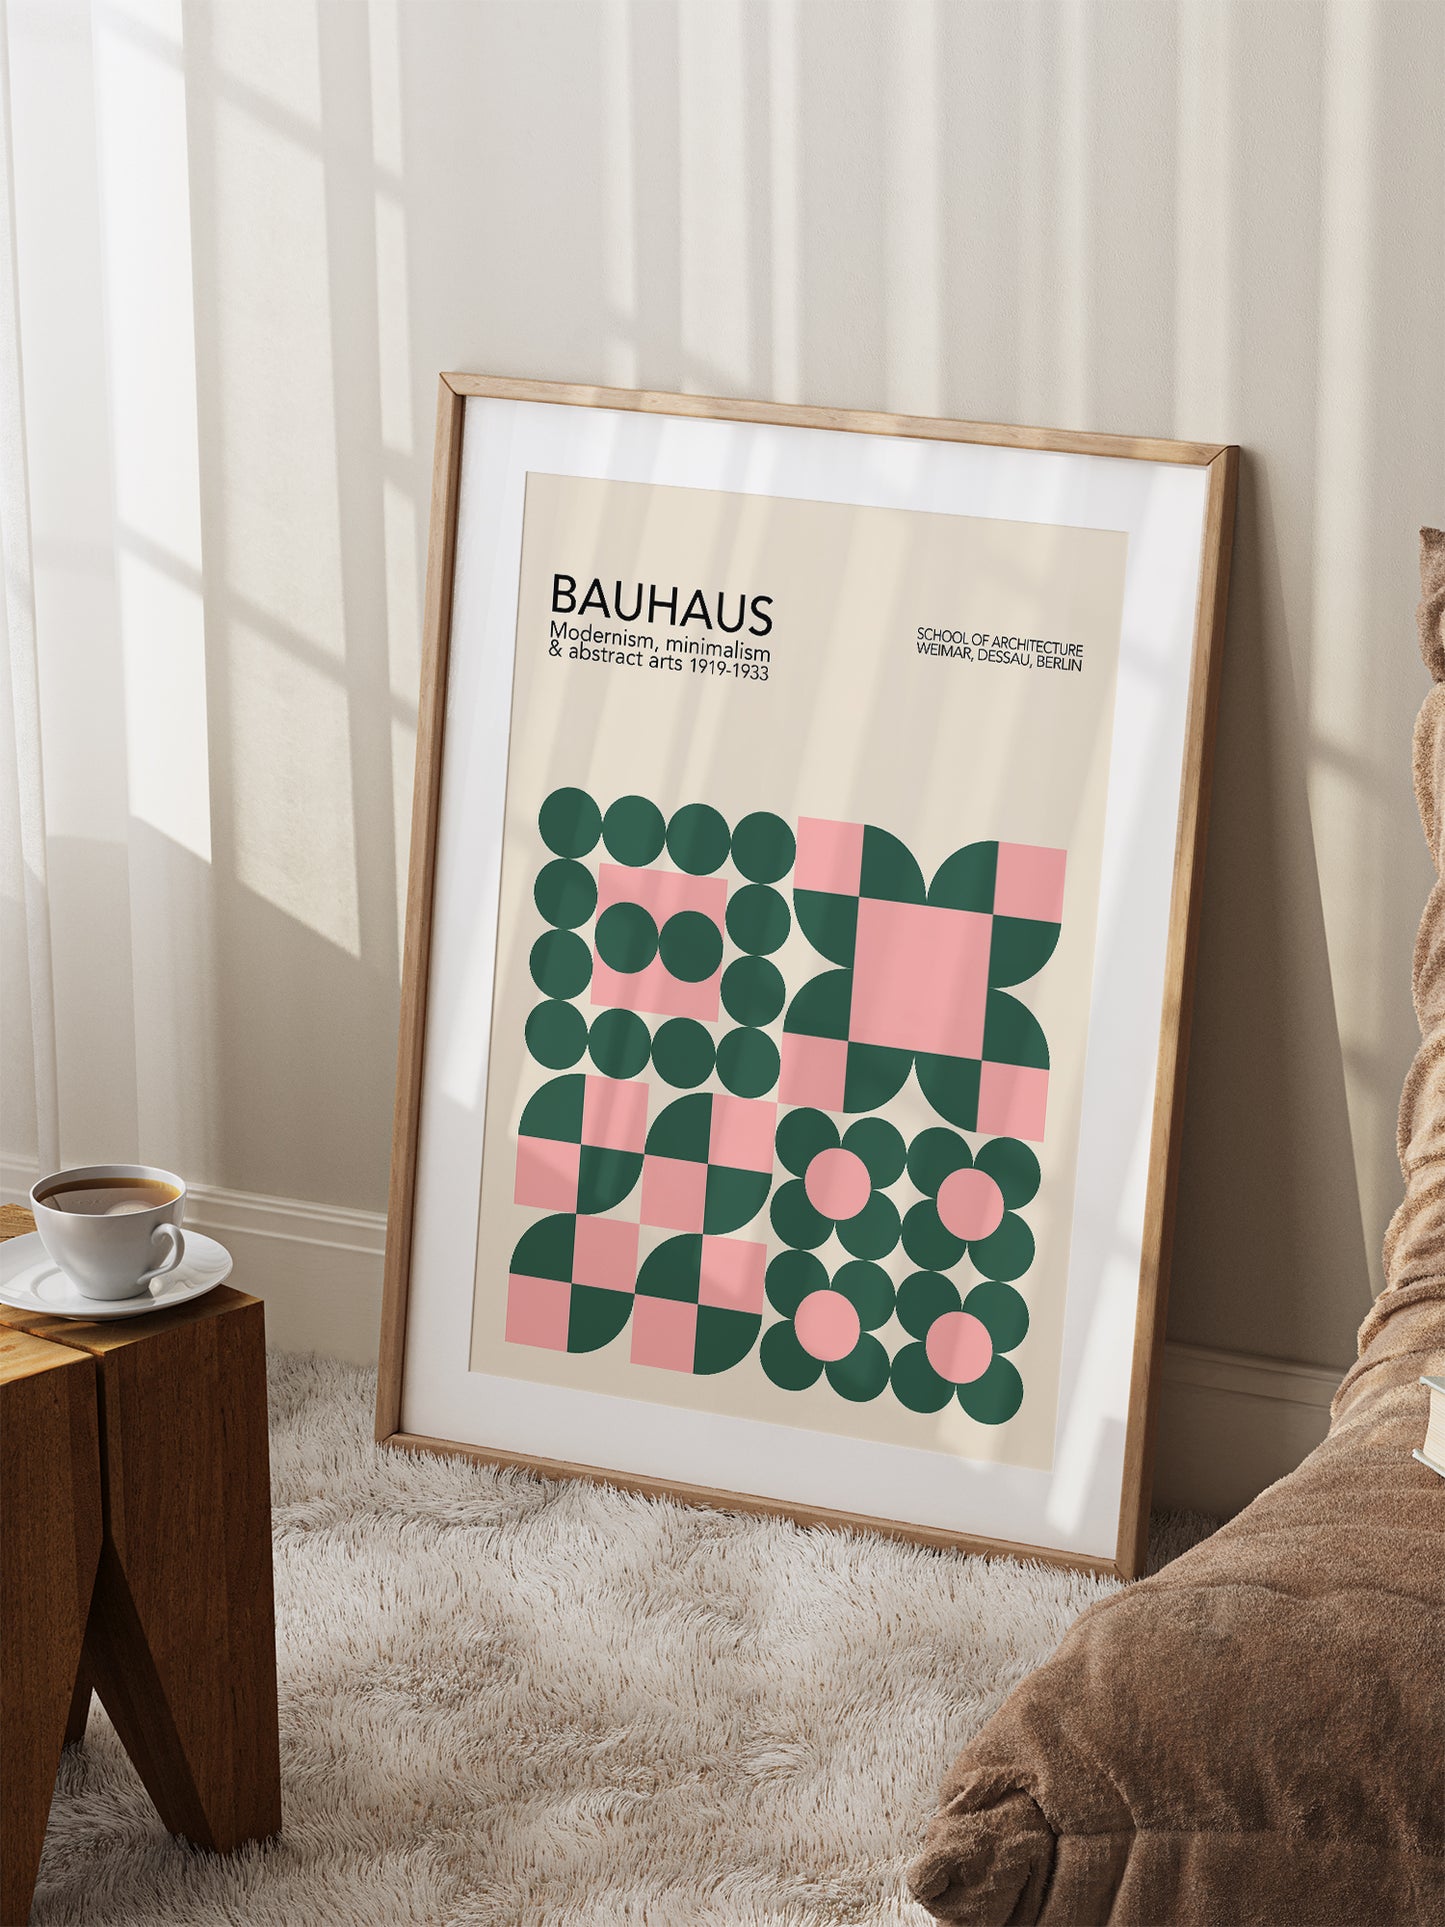 Green And Pink Bauhaus Poster